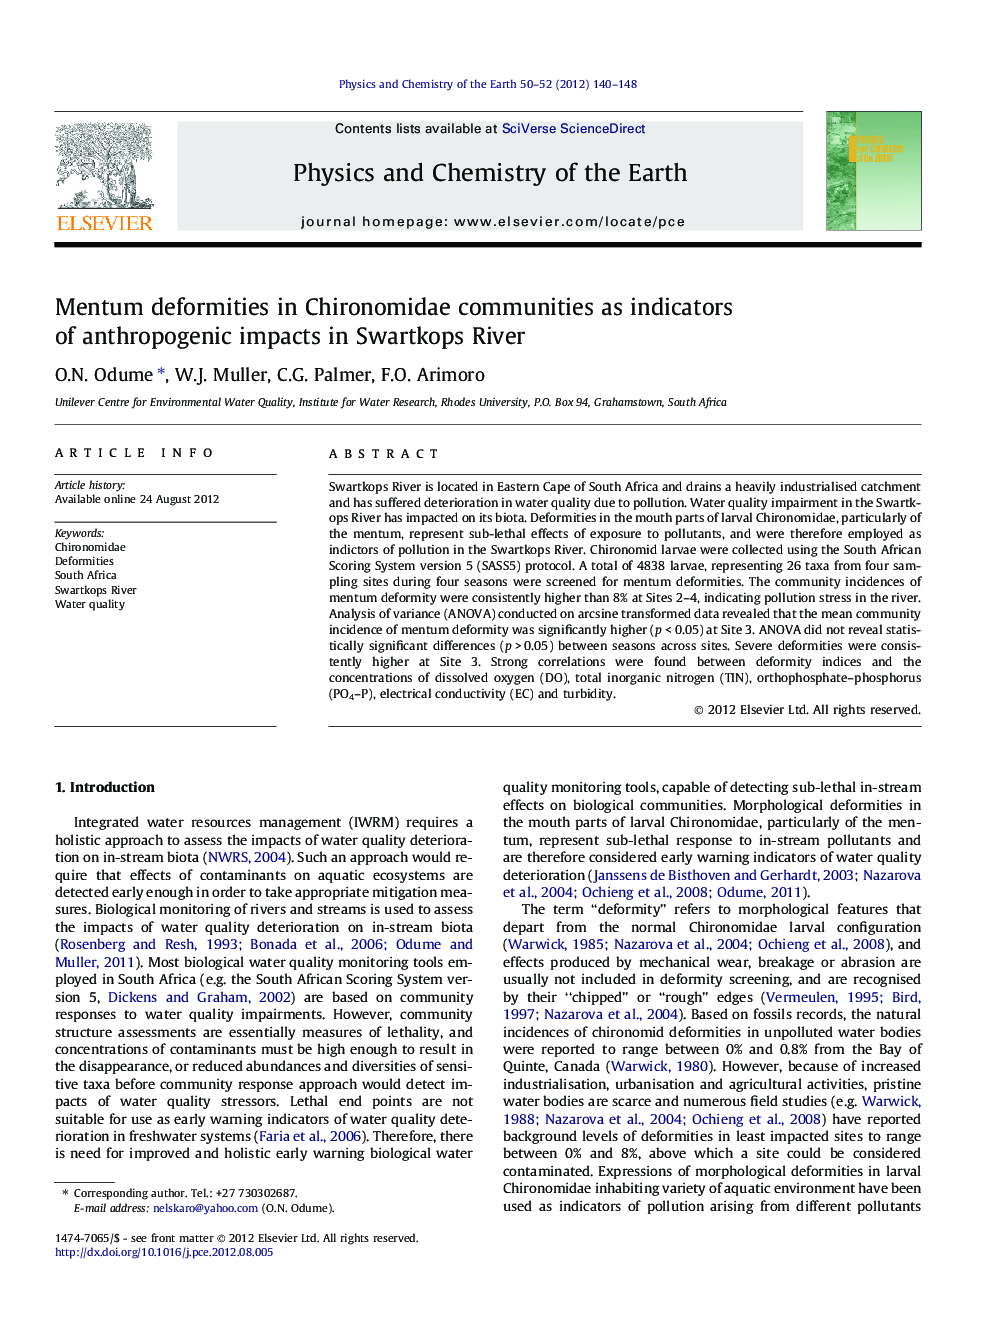 Mentum deformities in Chironomidae communities as indicators of anthropogenic impacts in Swartkops River